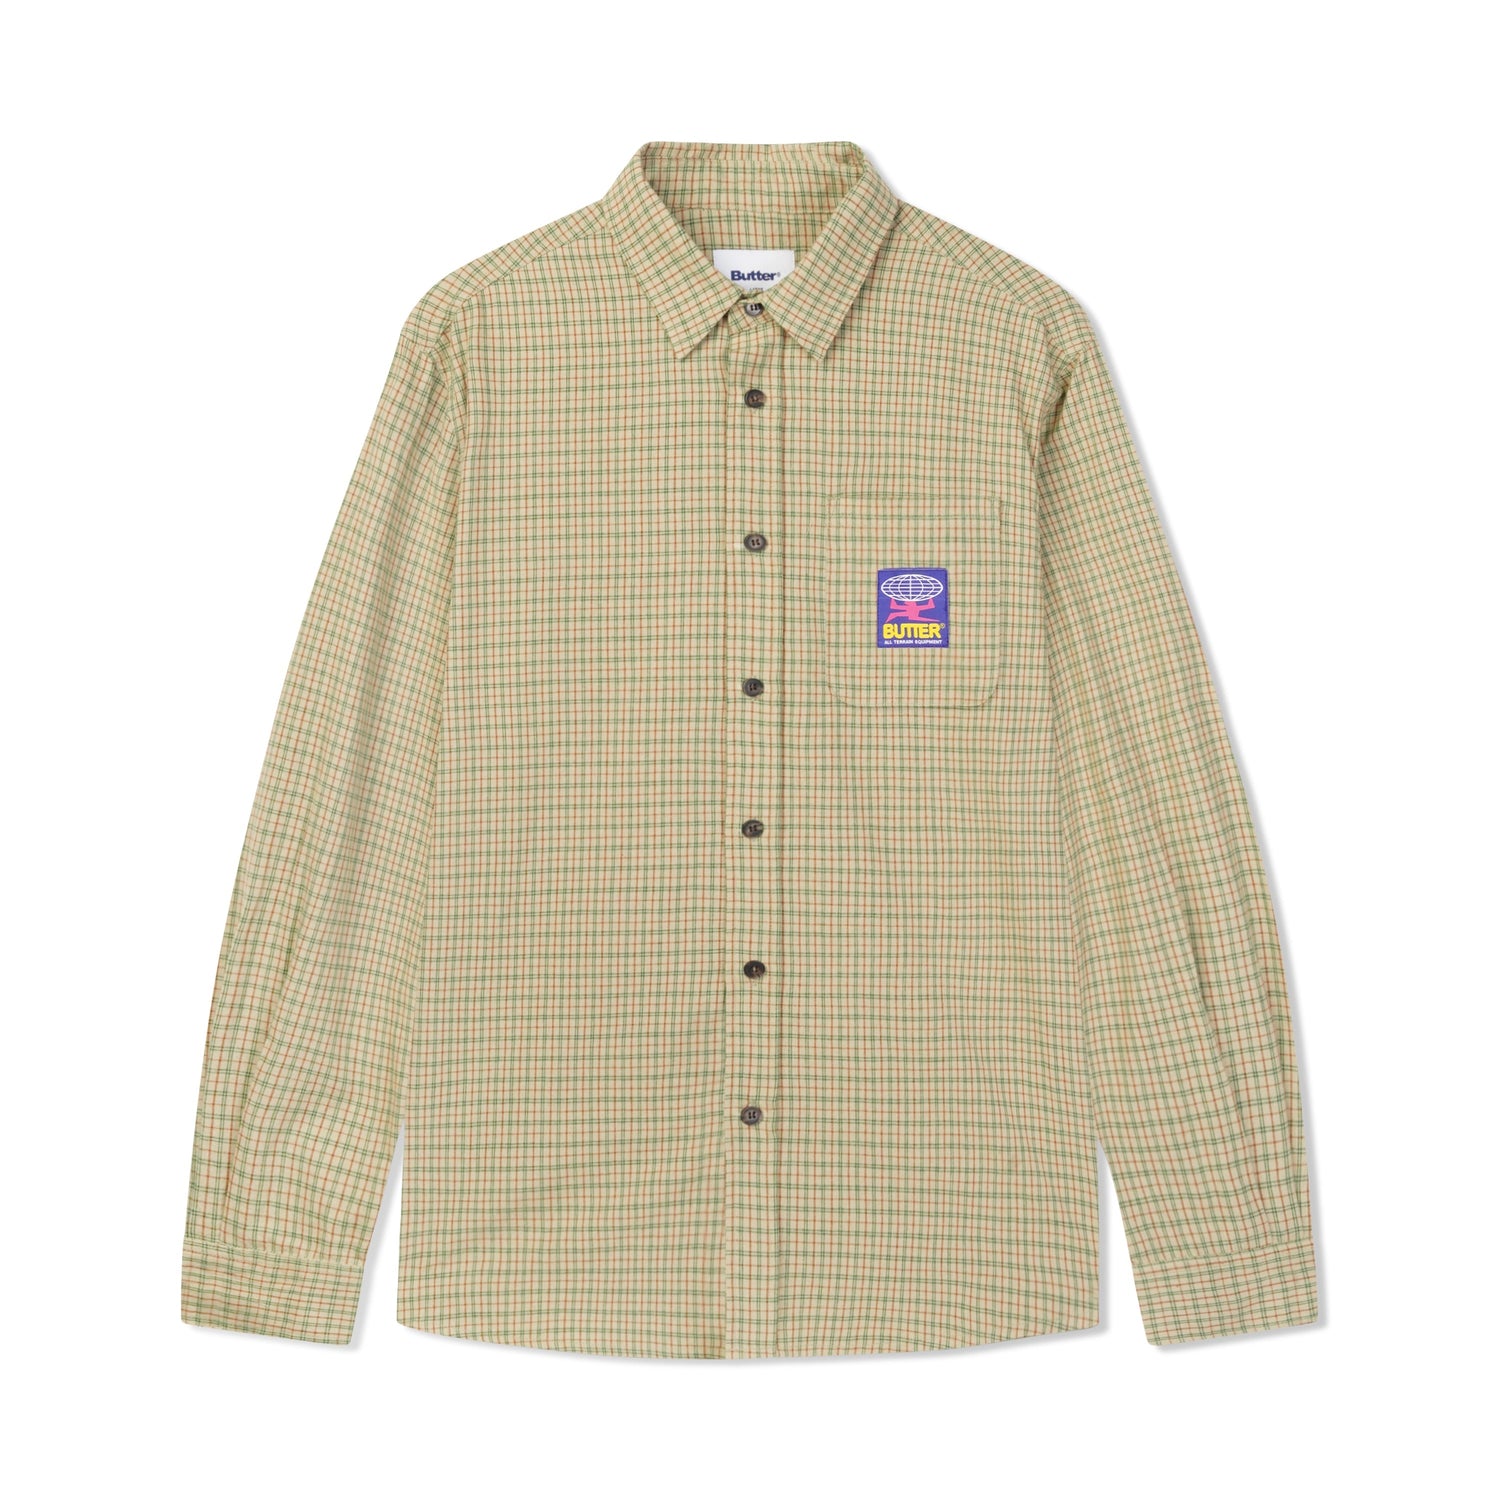 Terrain L/S Shirt, Cream / Forest